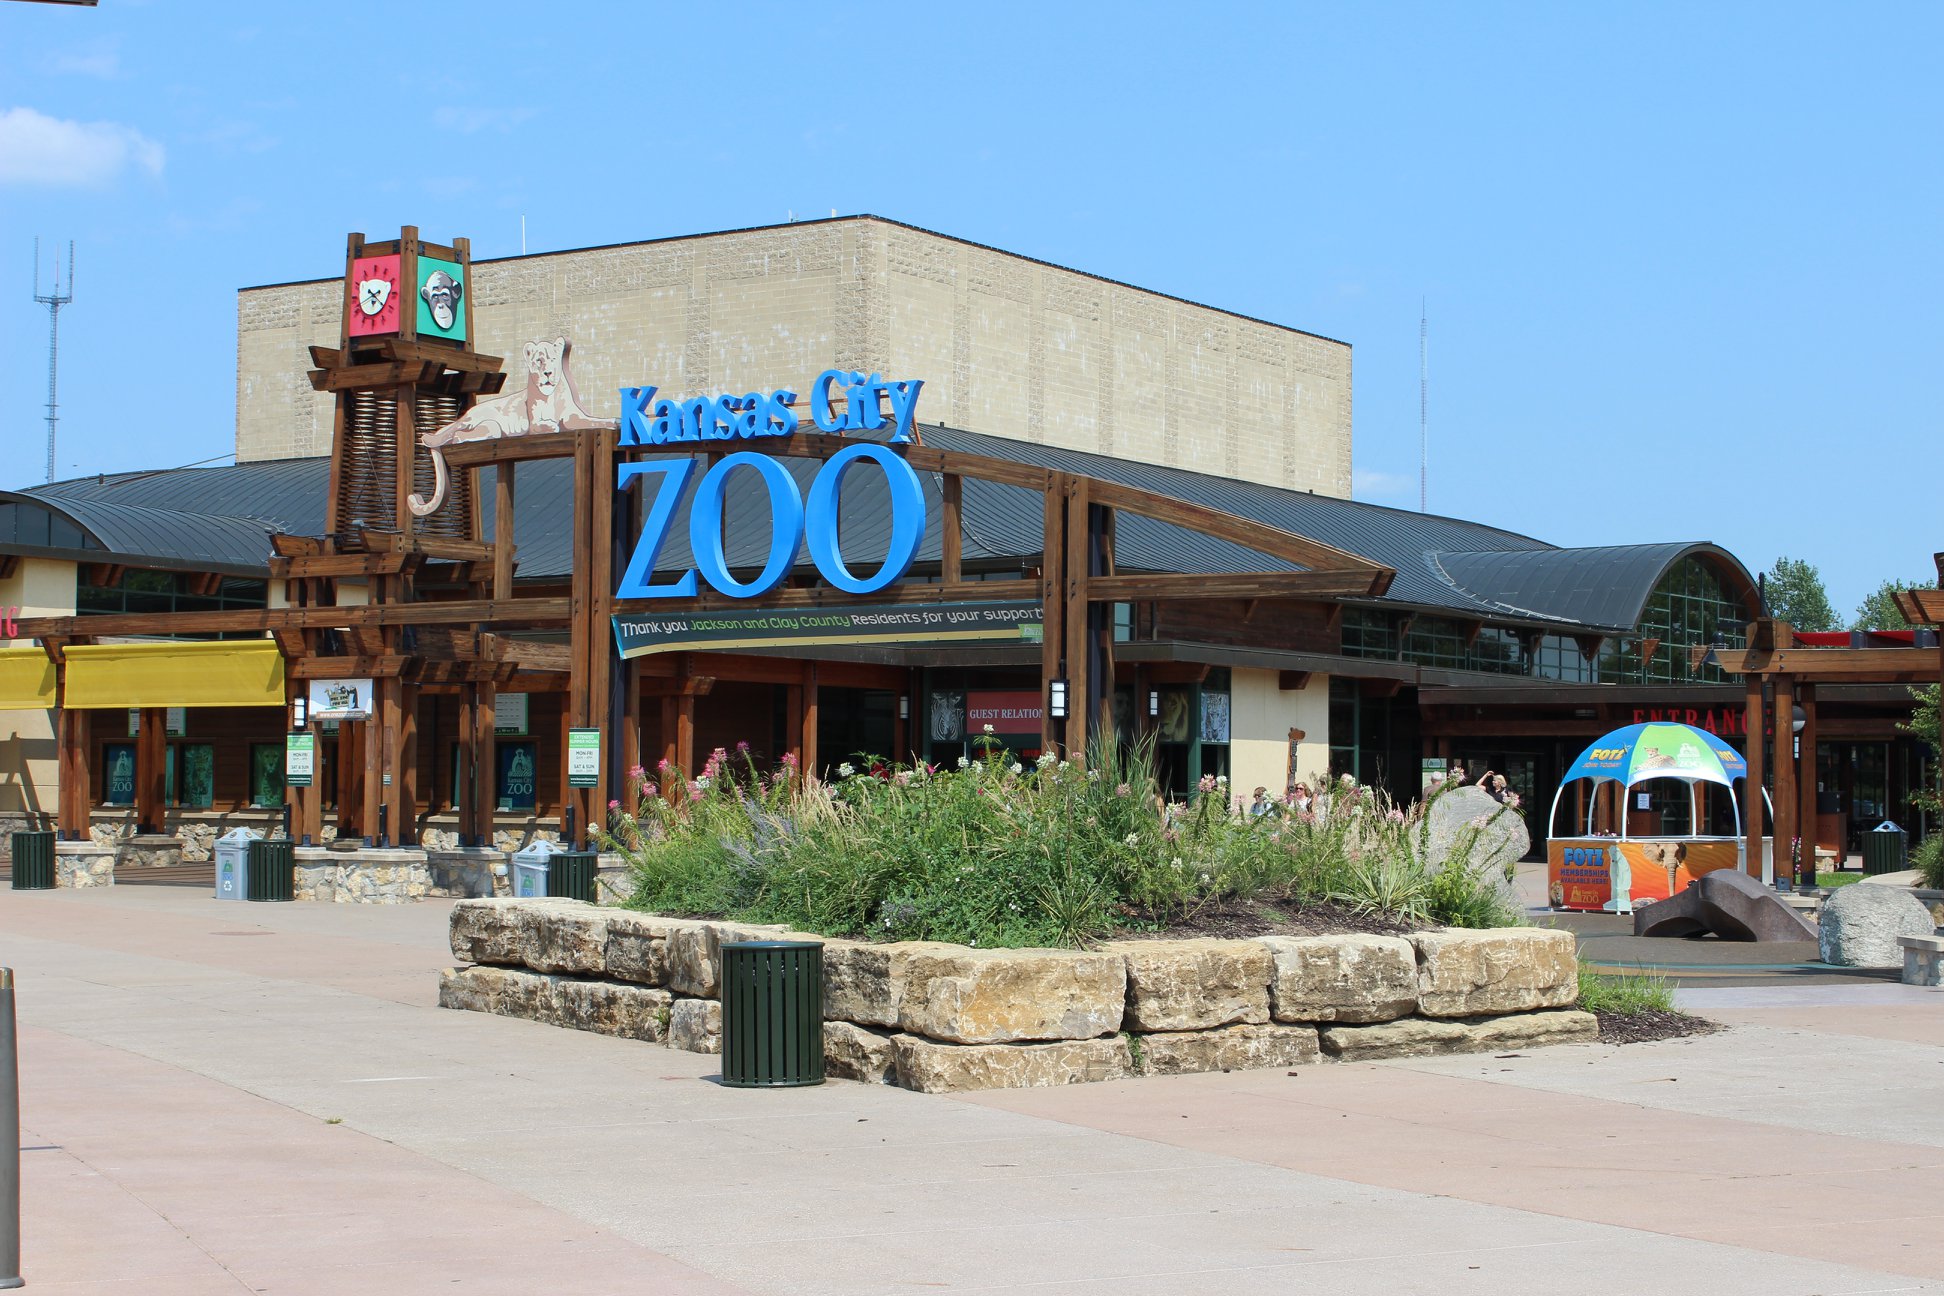 Kansas City Zoo and Aquarium